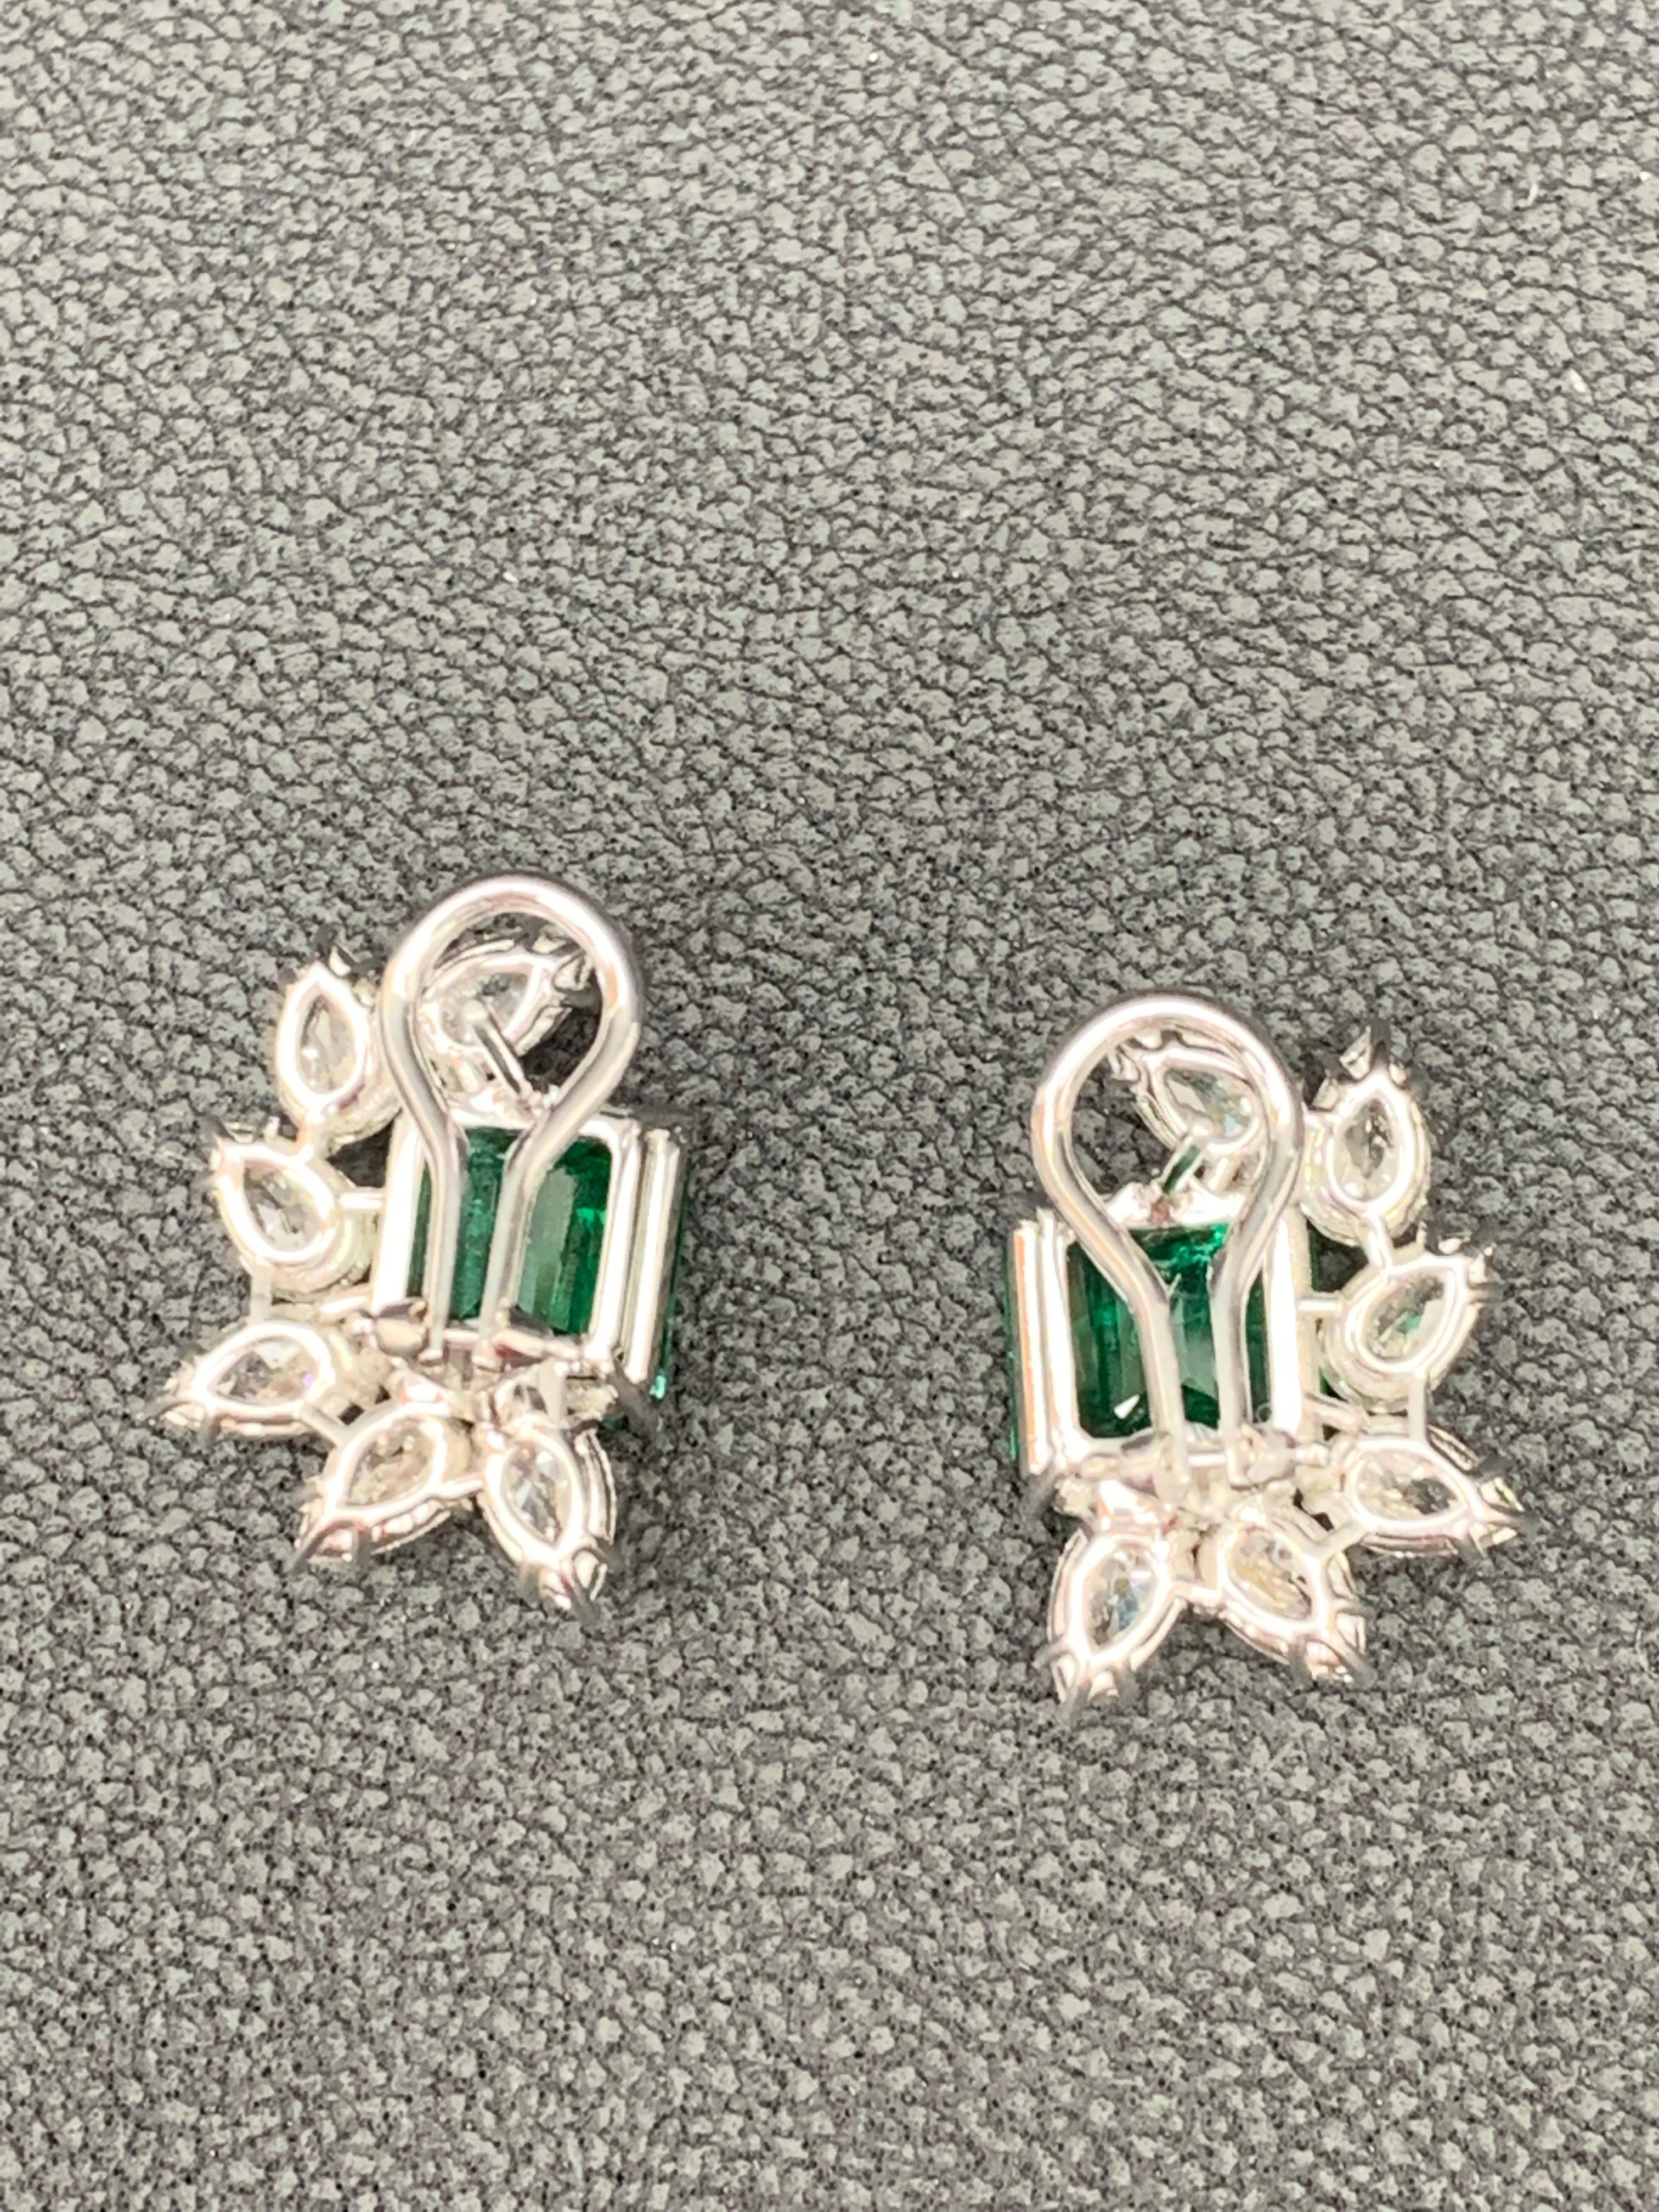 Women's Certified 7.82 Carat Emerald Cut Emerald and Diamond Cluster Earrings in 18K  For Sale